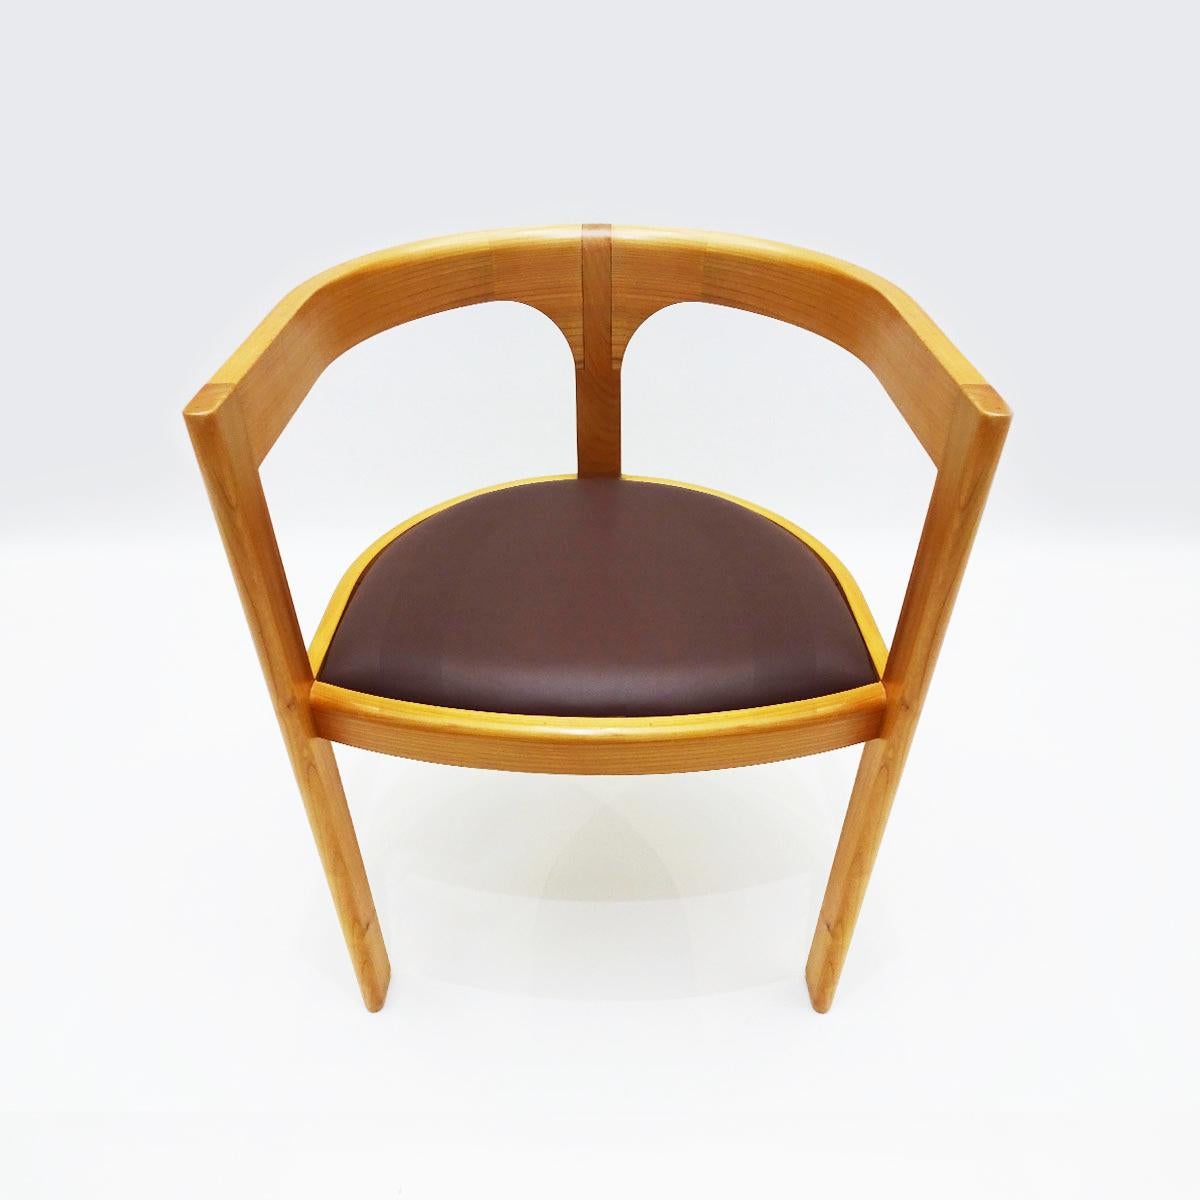 Modern Unique Chair by Danish Master Craftsmen Rud Thygesen and Niels Roth Andersen